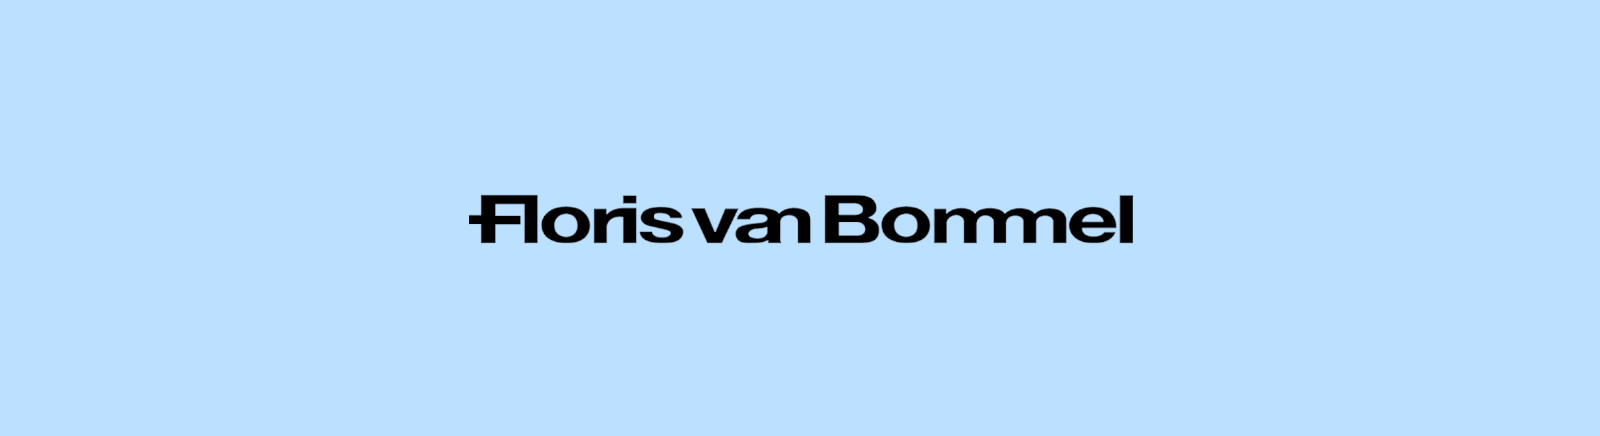 Floris van Bommel Markenschuhe online bestellen im Prange Schuhe Shop